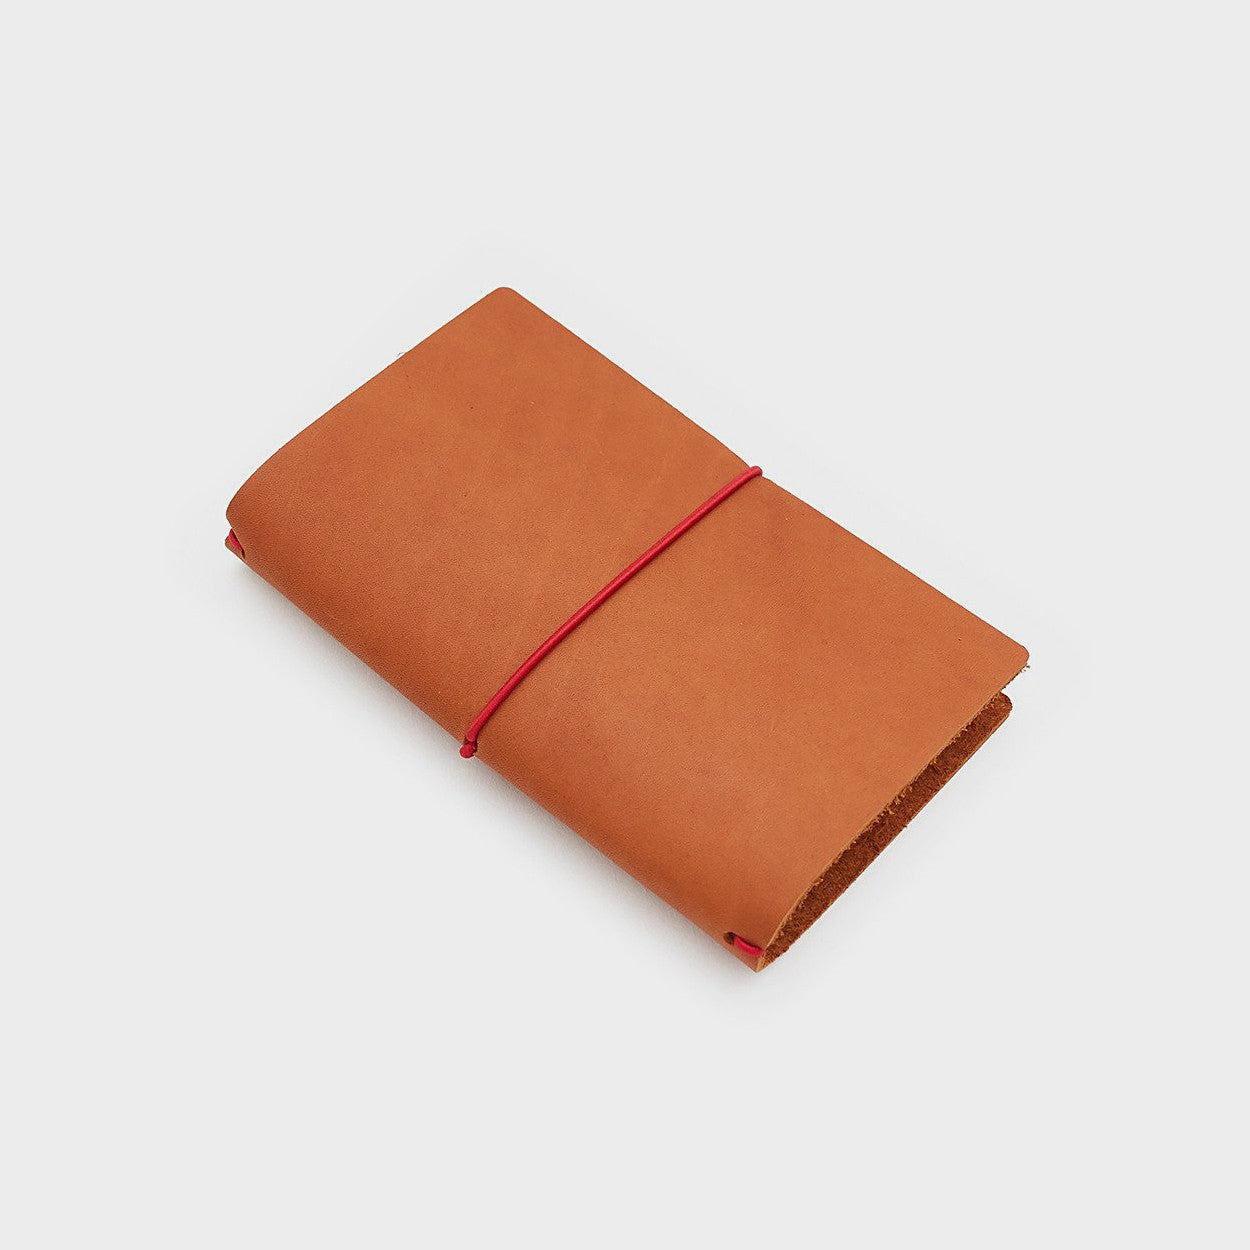 Leather Jacket - Chestnut/Red